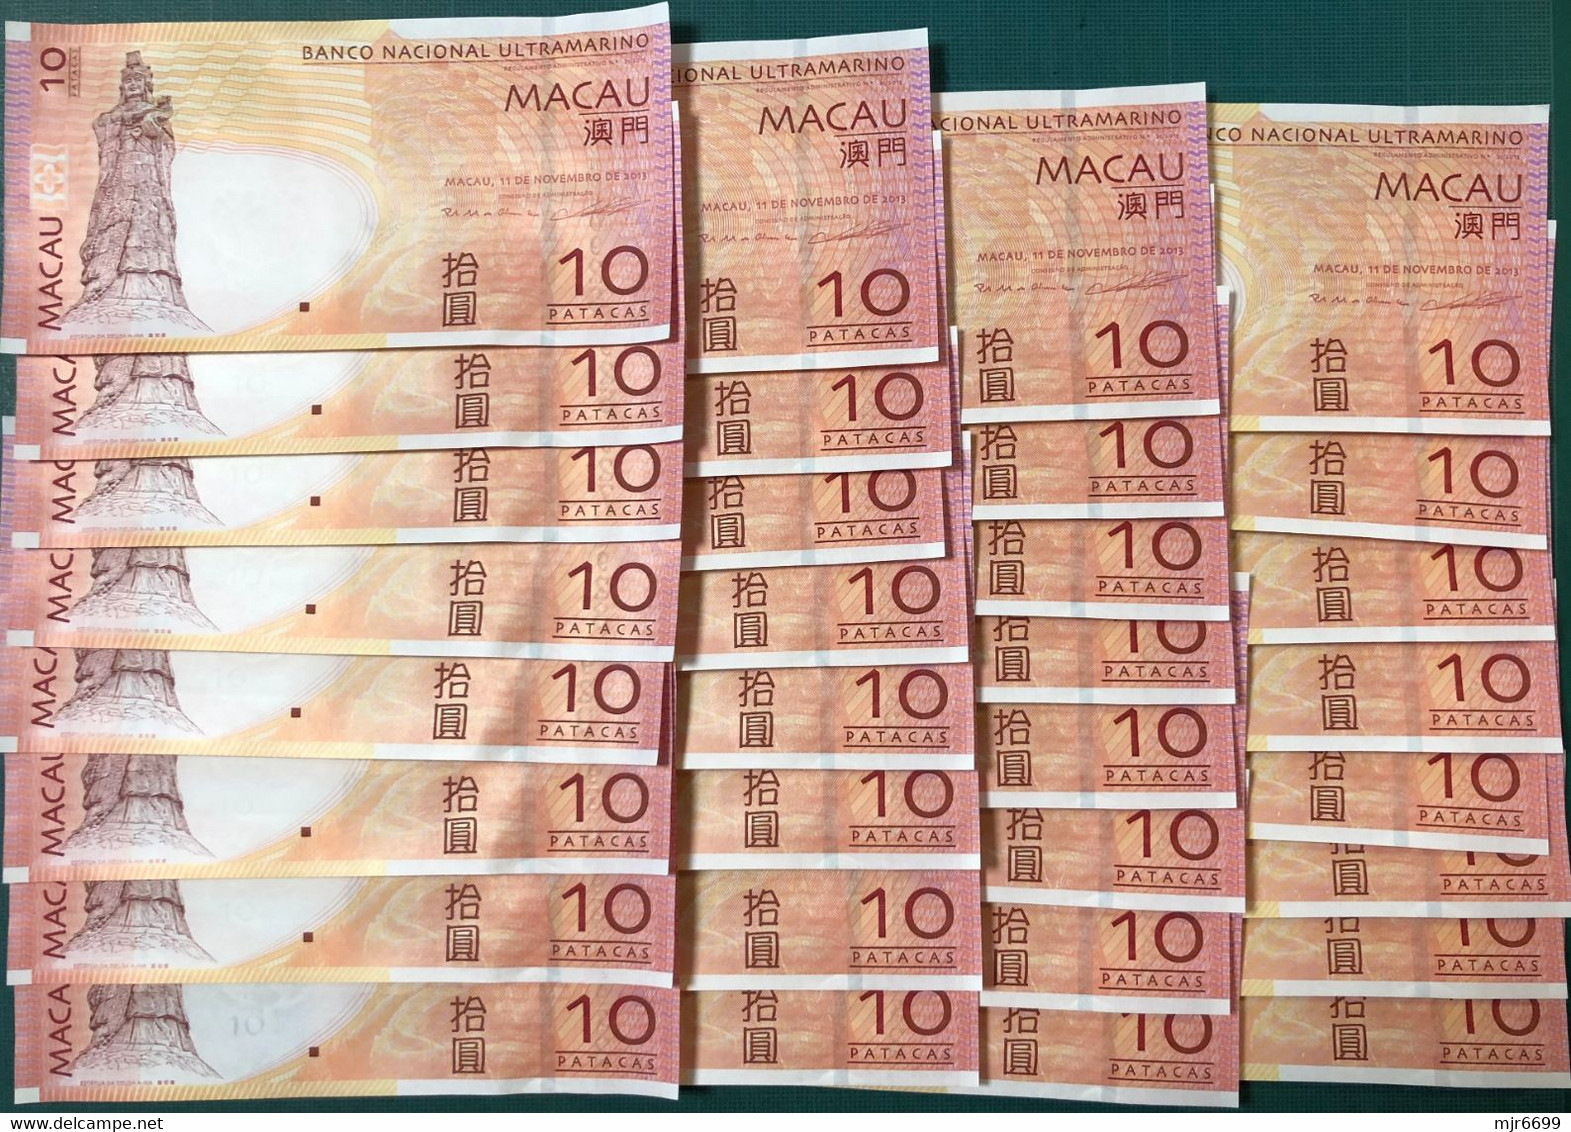 MACAU 2013 BANCO NACIONAL ULTRAMARINO 10 PATACAS UNC 4 X 8, TOTAL 32 BANK NOTES FOUR SETS OF SAME NUMBER BANK NOTES - Macau